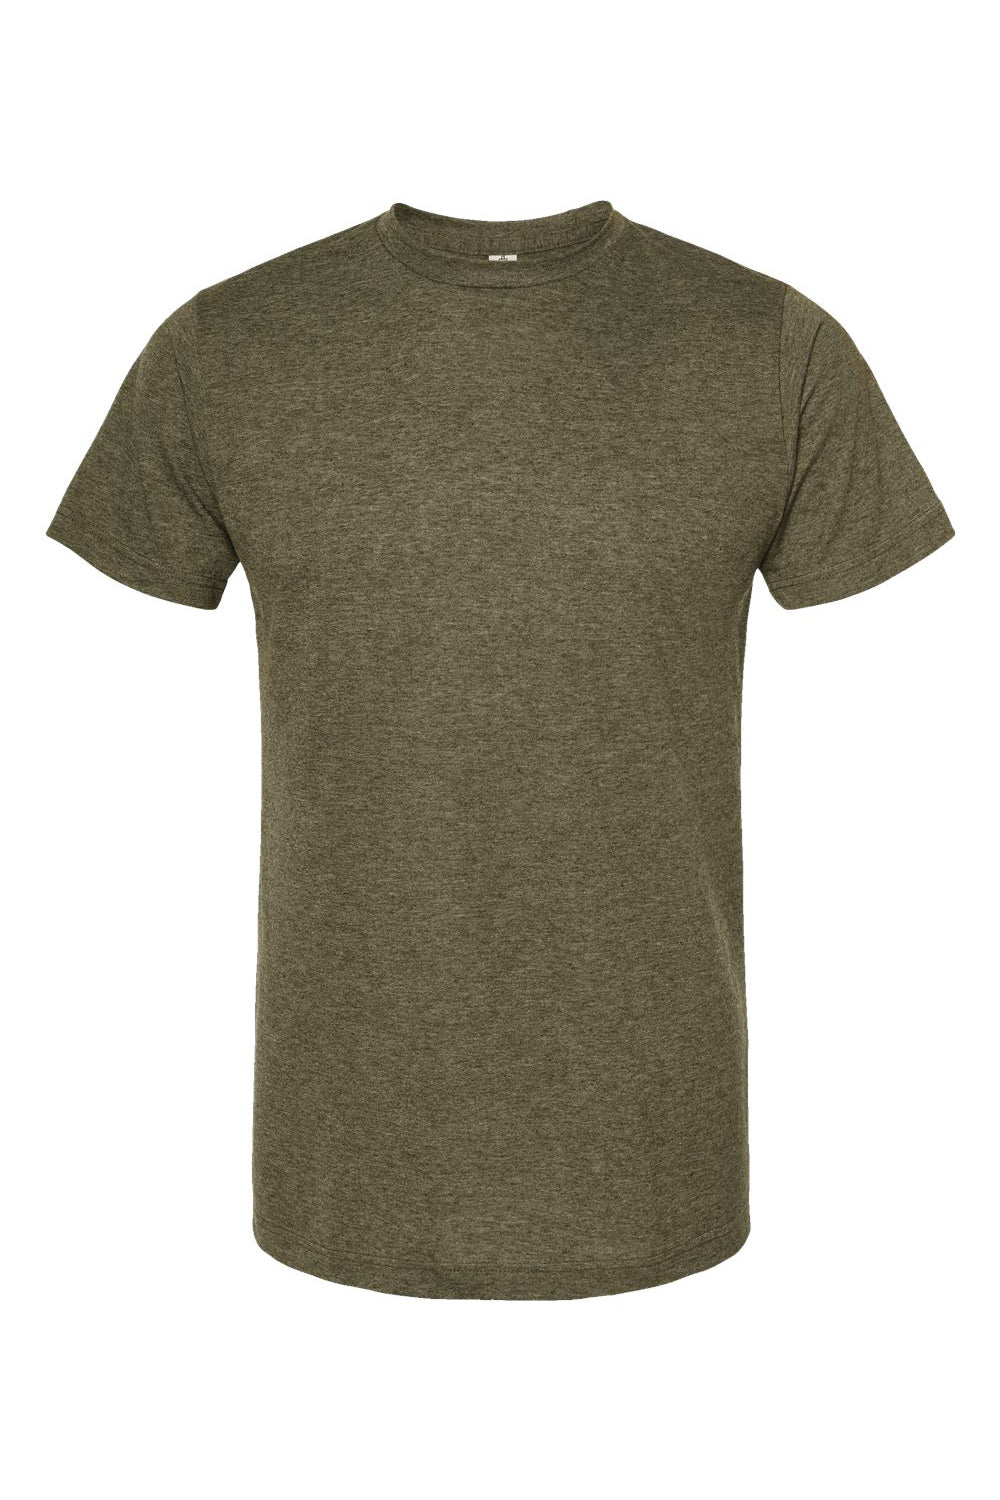 Tultex 241 Mens Poly-Rich Short Sleeve Crewneck T-Shirt Heather Military Green Flat Front